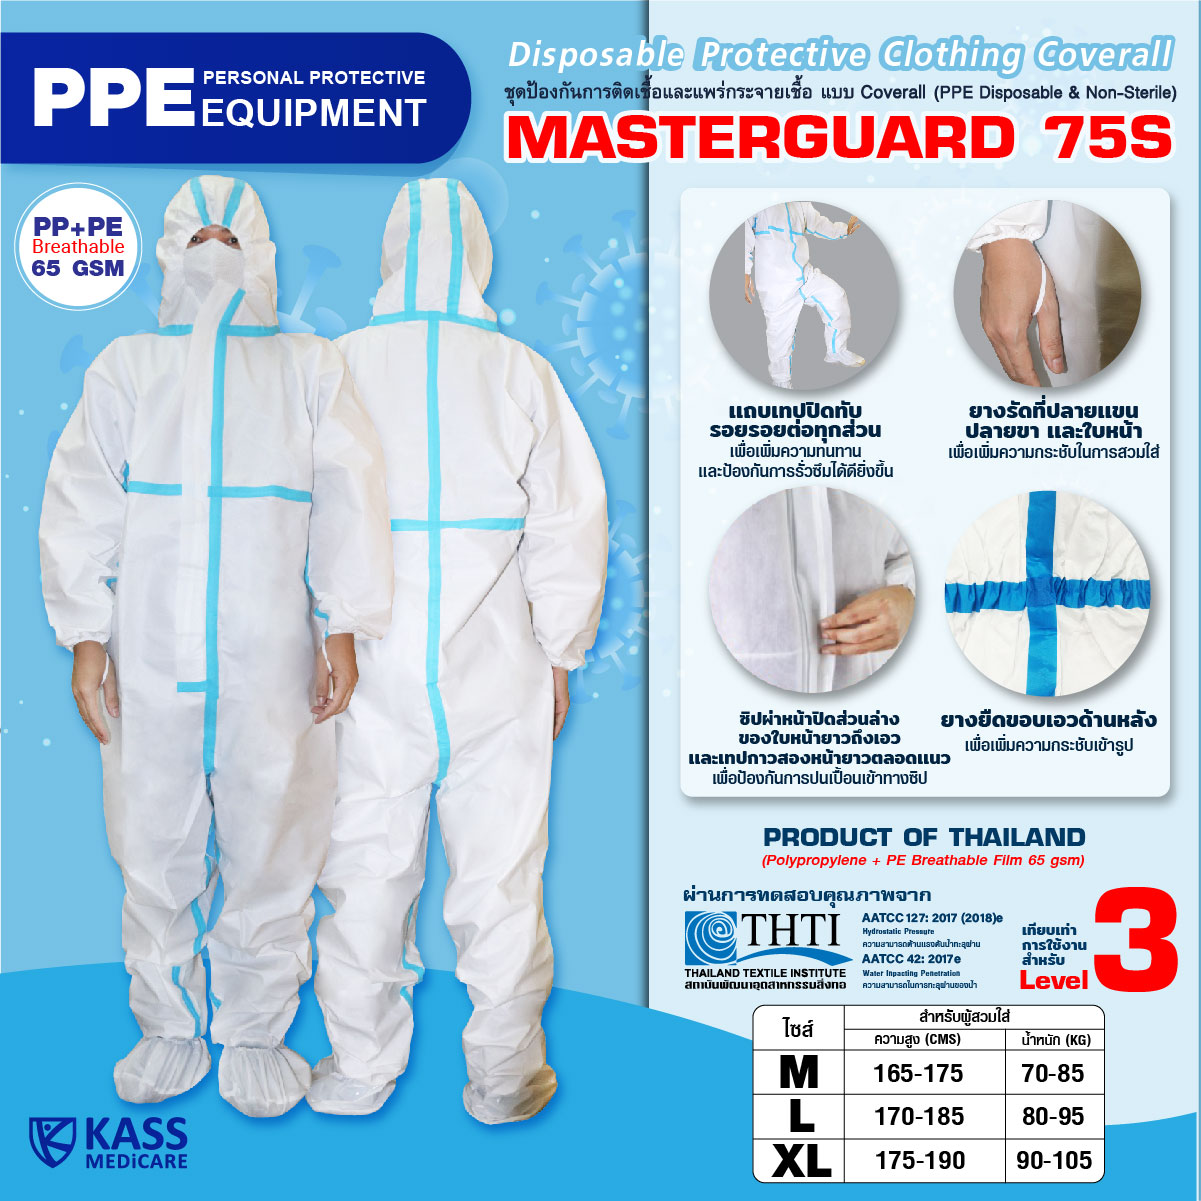 Disposal Protective Clothing : MASTERGUARD 75S Coverall รุ่น MasterGuard 75S  ชุด PPE แบบ Coverall หรือชุดหมี แบบใช้ครั้งเดียวทิ้ง ชนิดไม่สเตอร์ไรด์